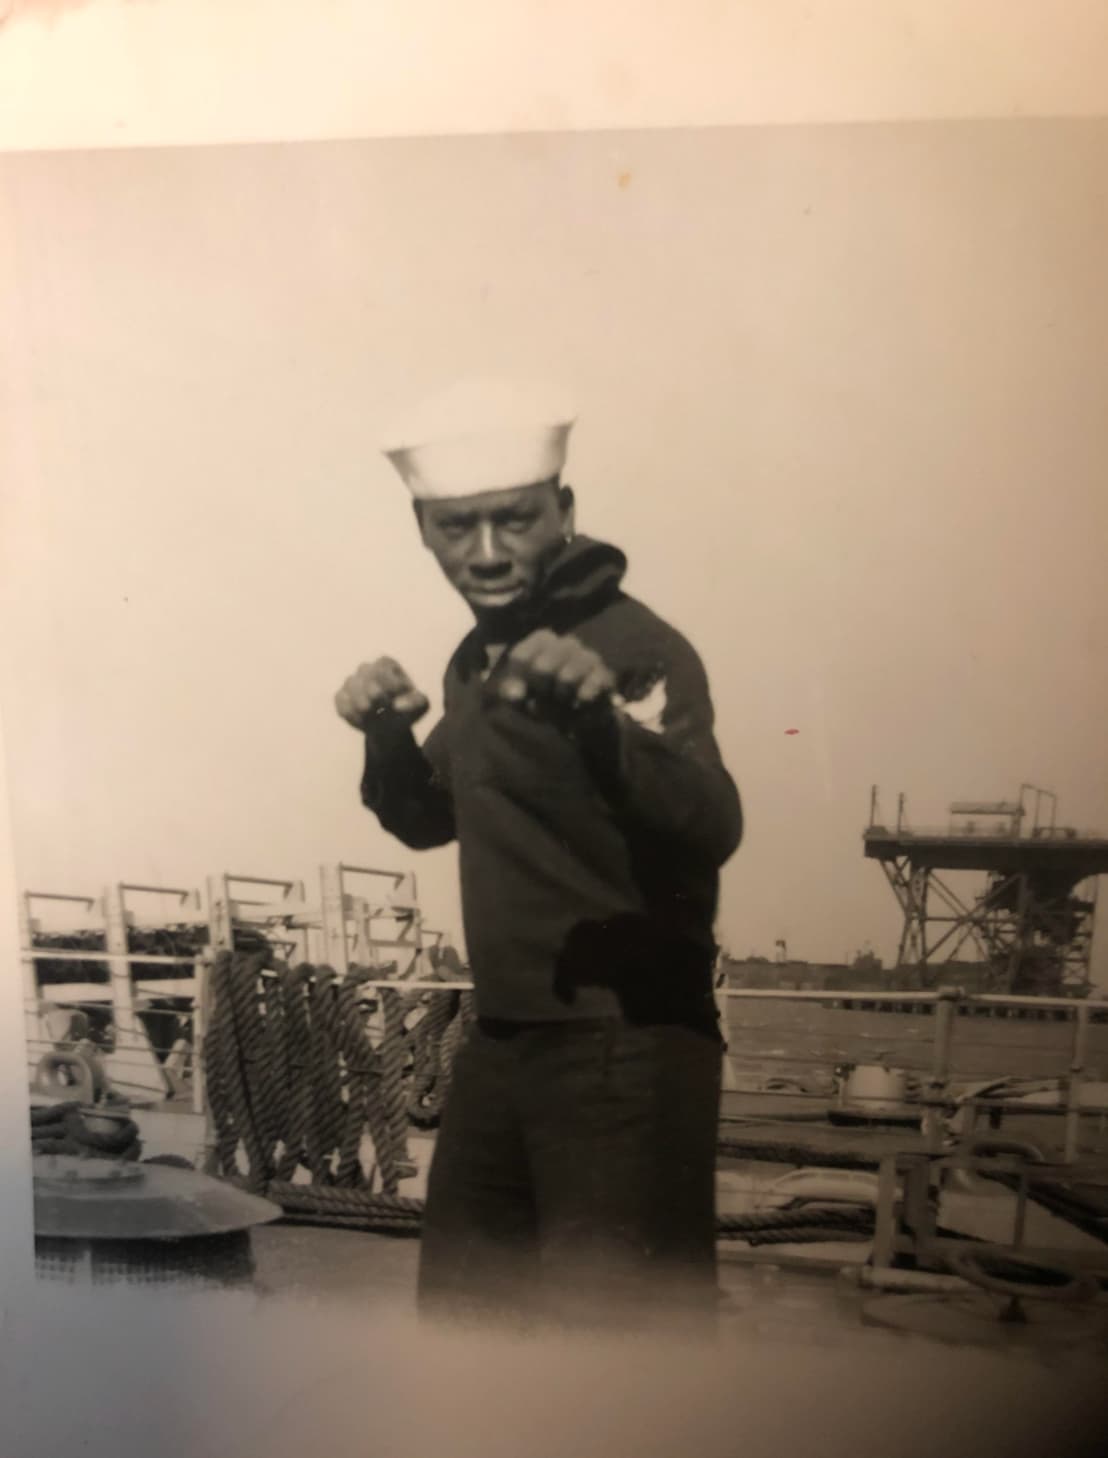 “My grandpa circa 1930s in the US Navy.”